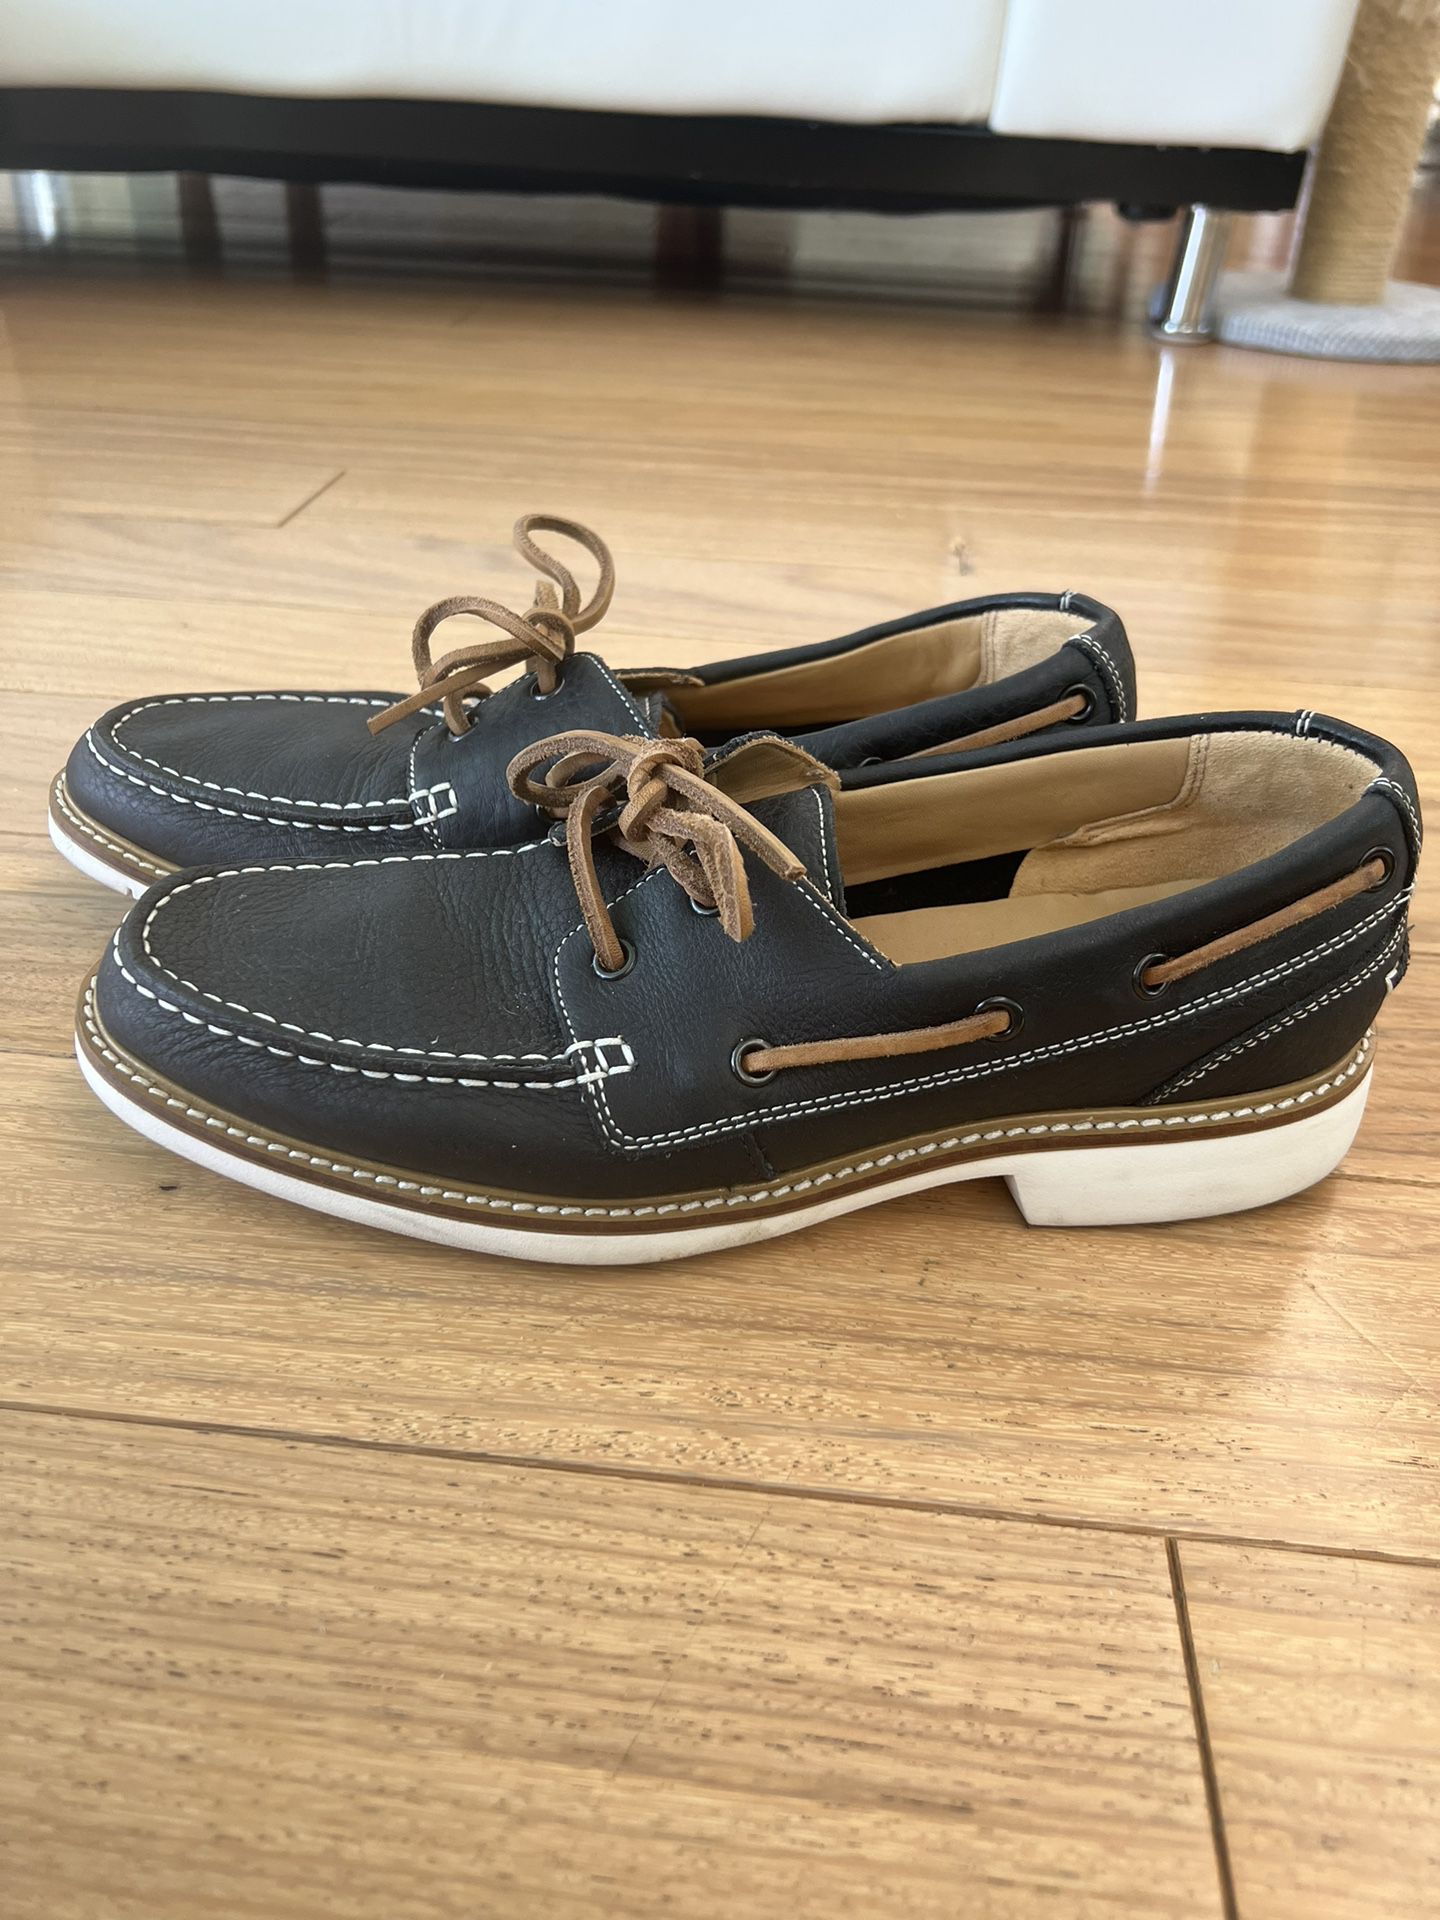 Men's Cole Hann Regatta/Boat Shoes 9.5 Navy Leather for Sale in Laguna ...